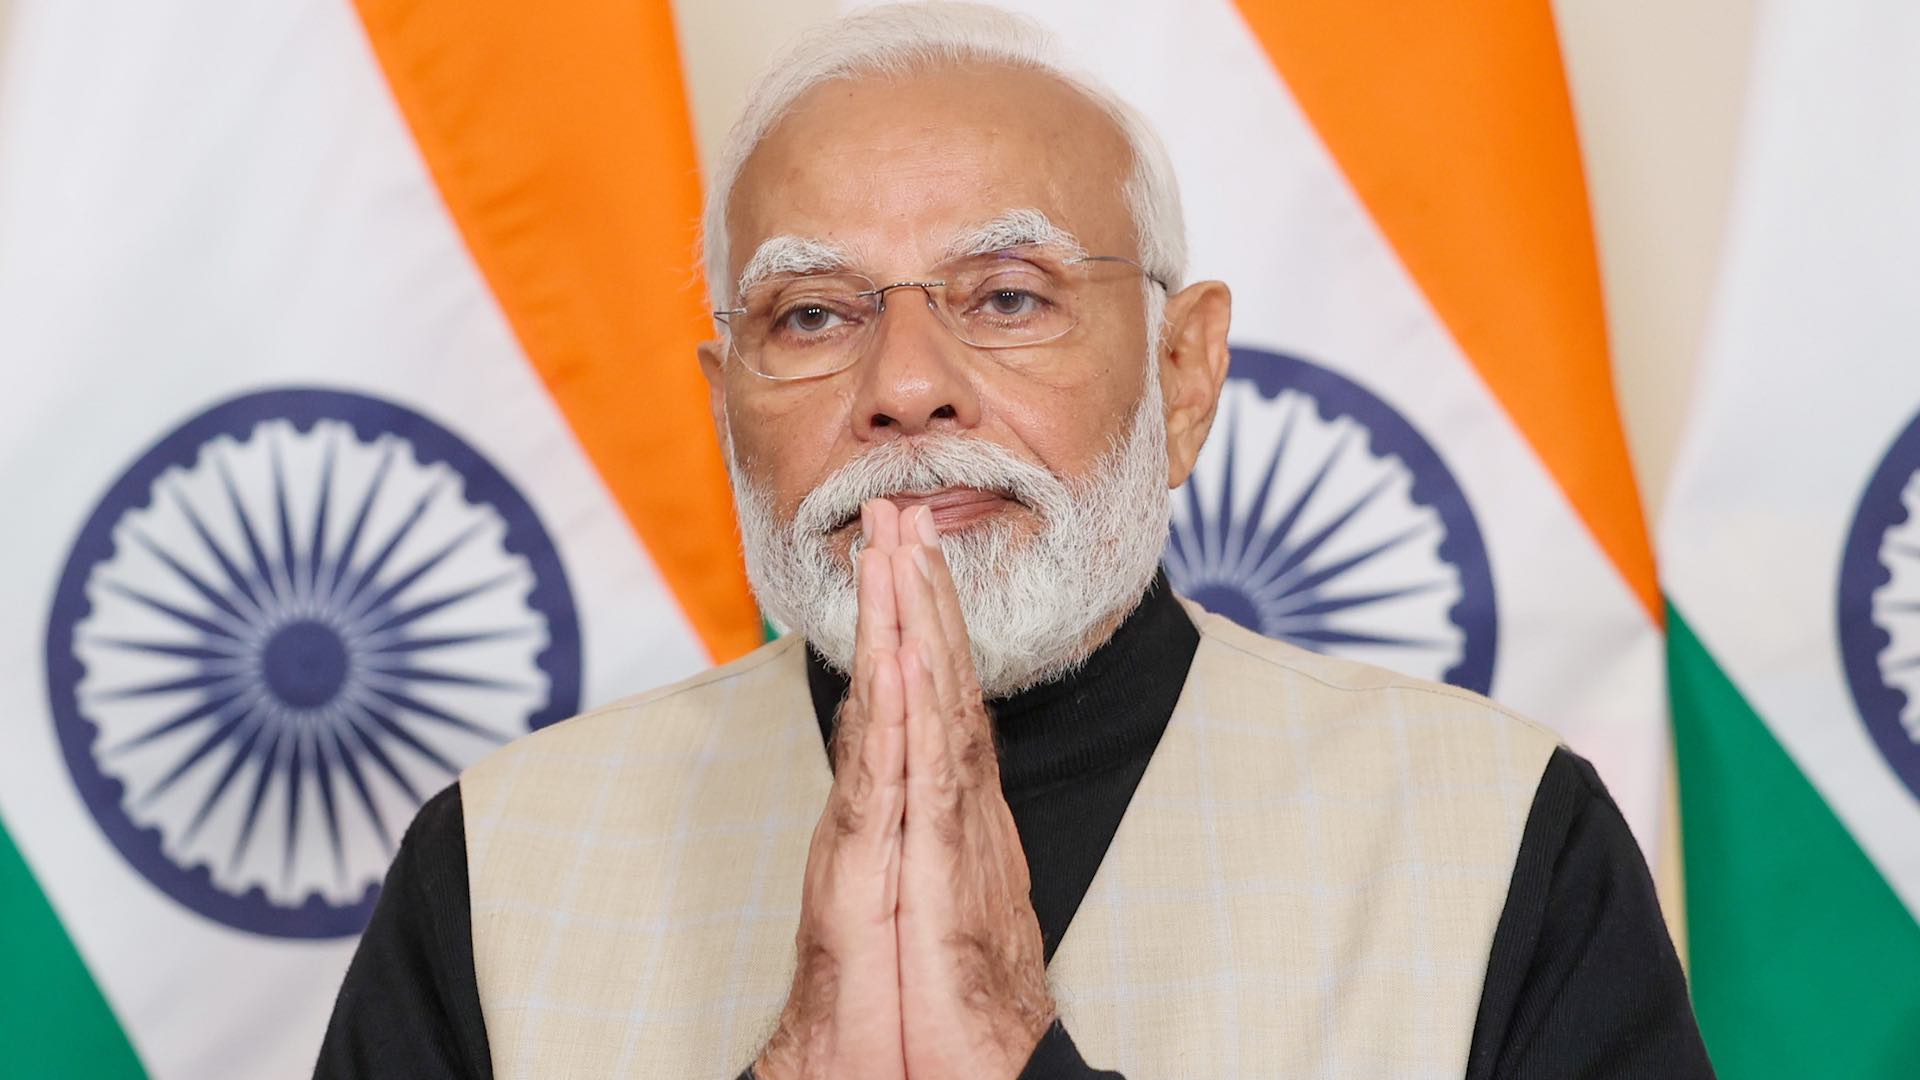 PM Modi reshapes India's economic trajectory